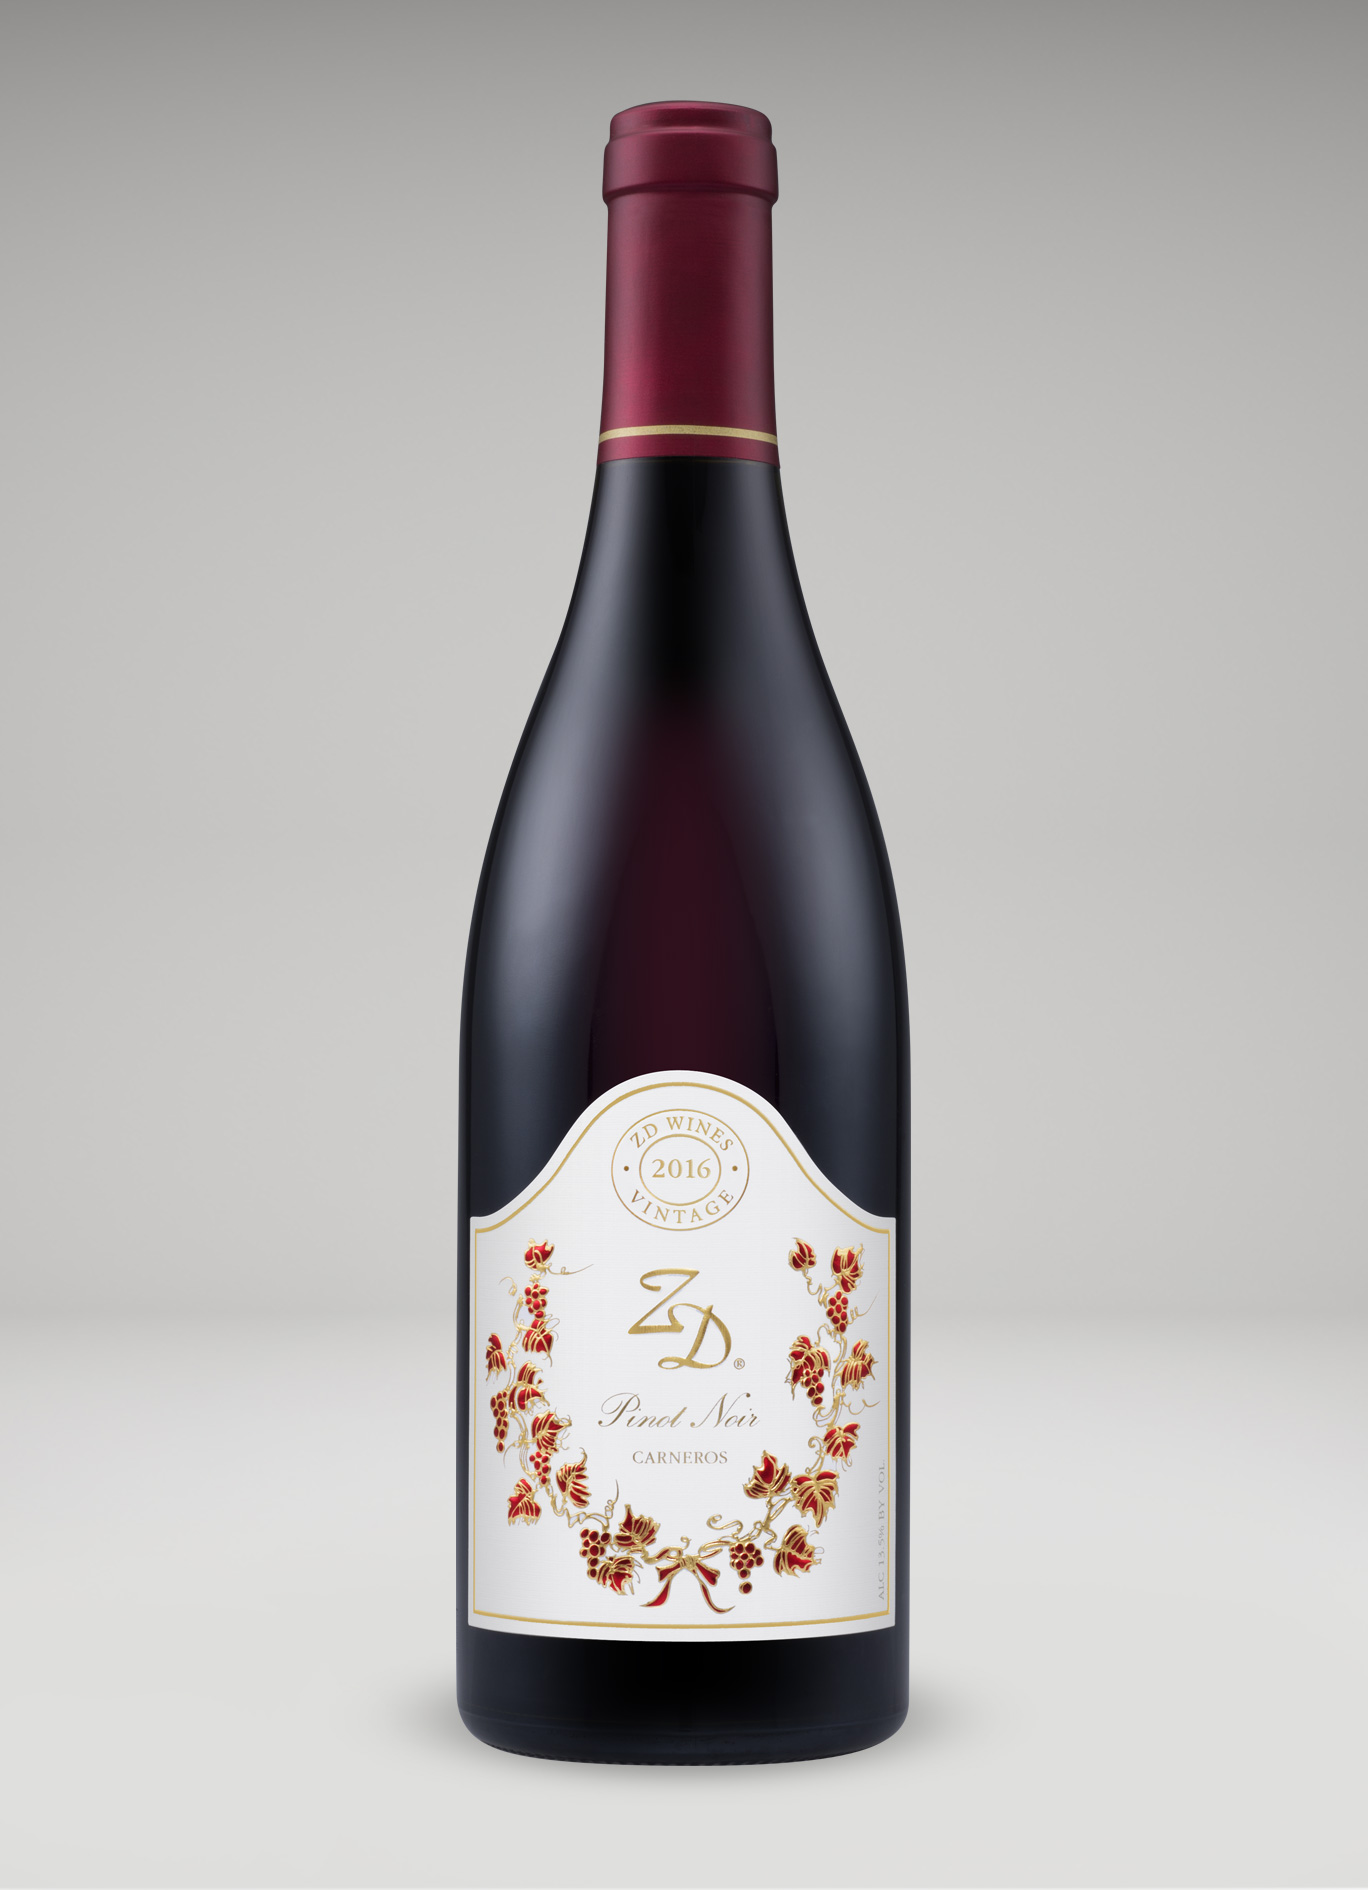 A bottle of 2016 ZD Pinot Noir, Carneros